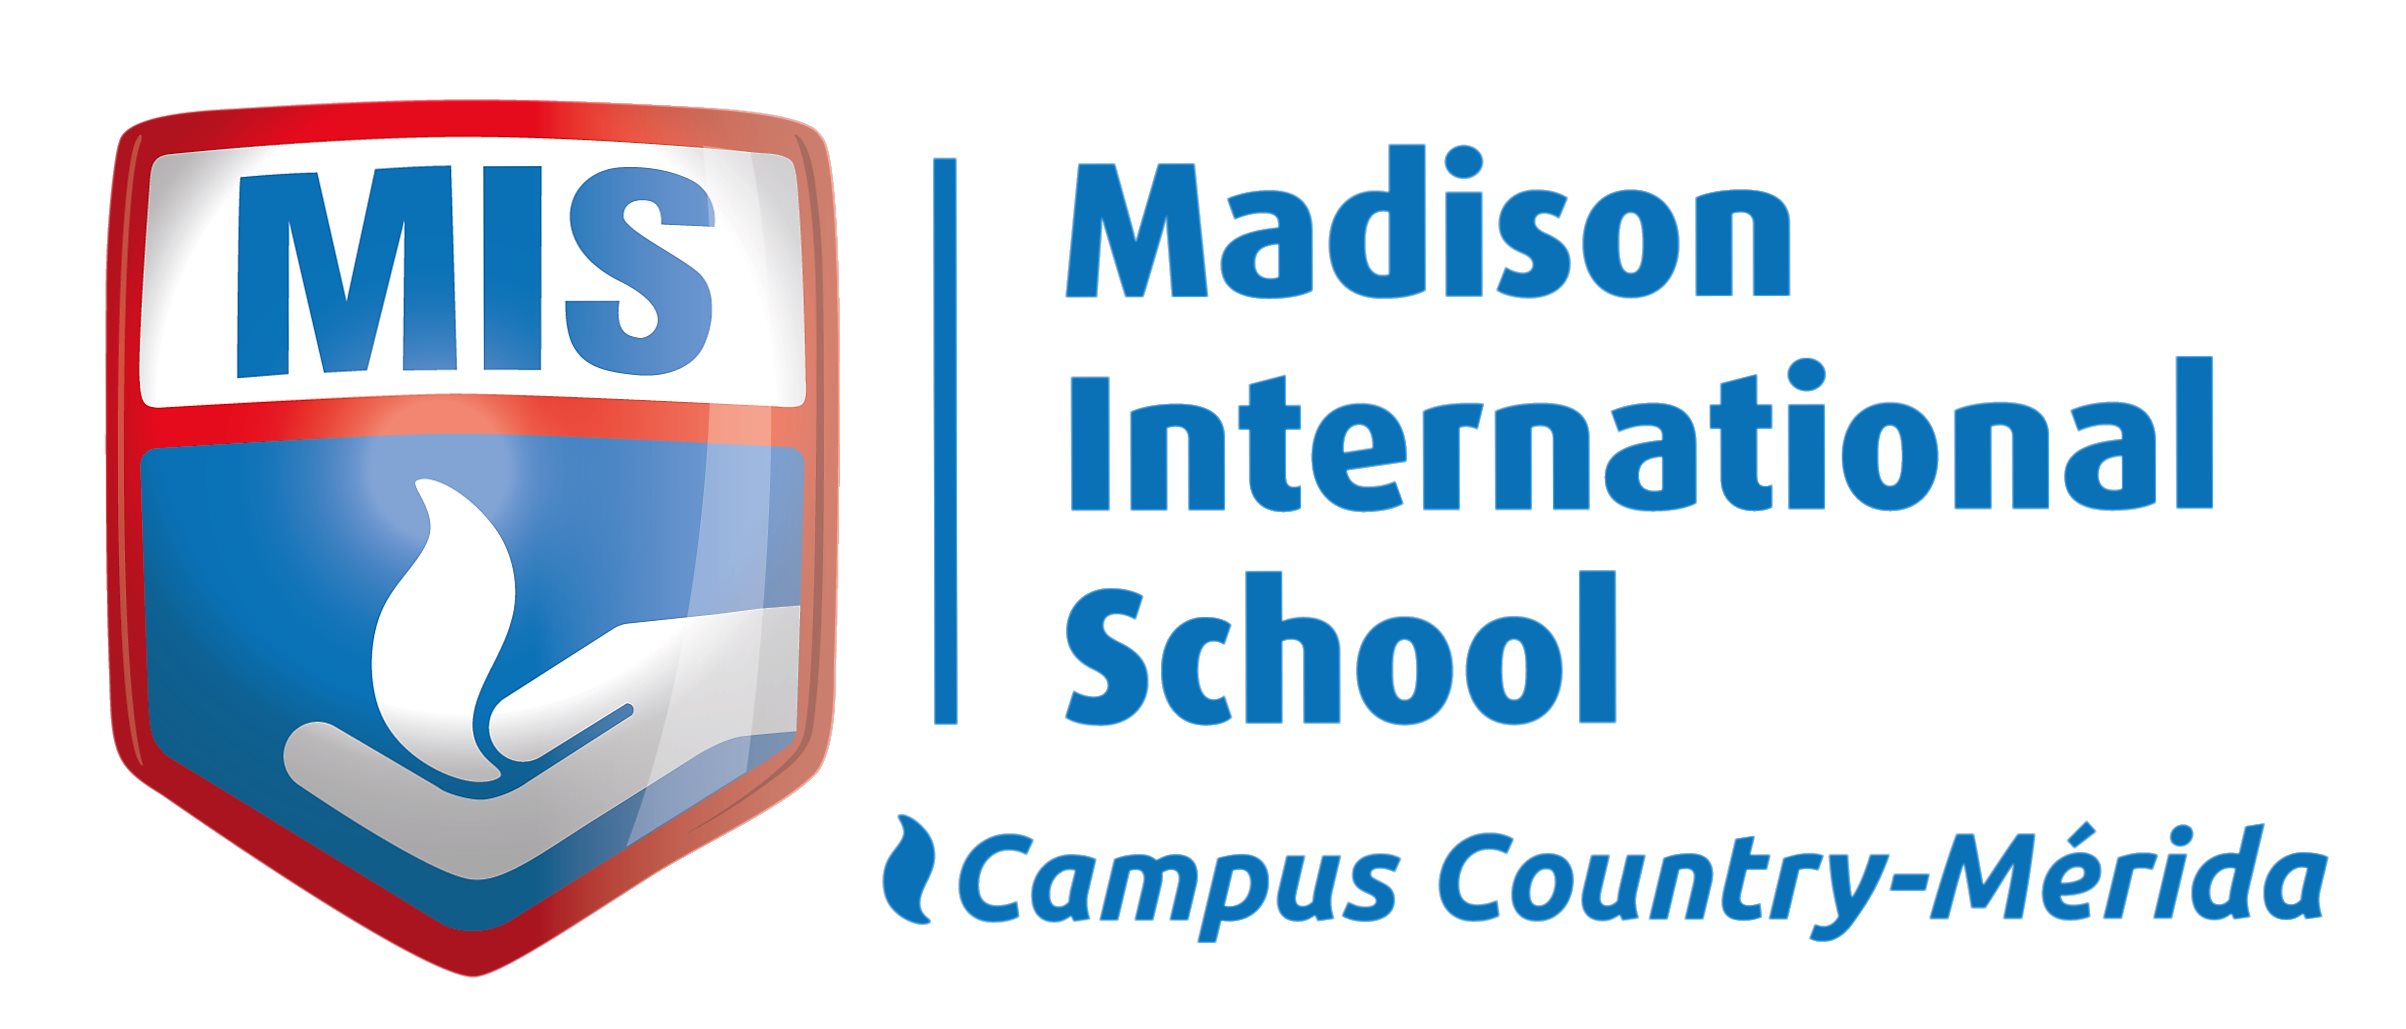 Madison International School Merida1